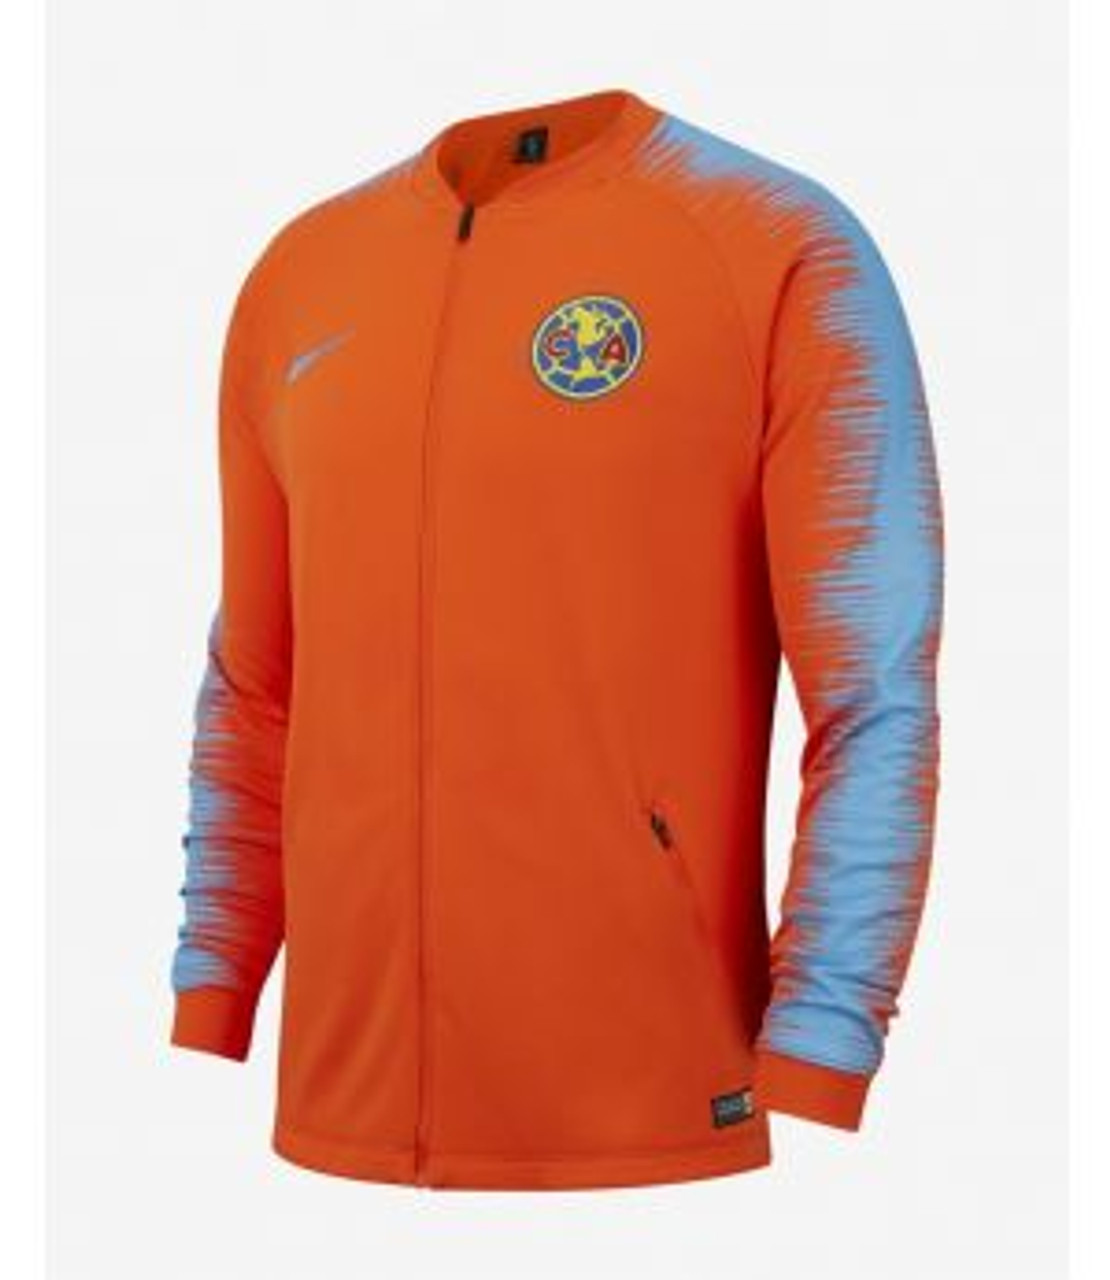 club america jersey 2019 orange